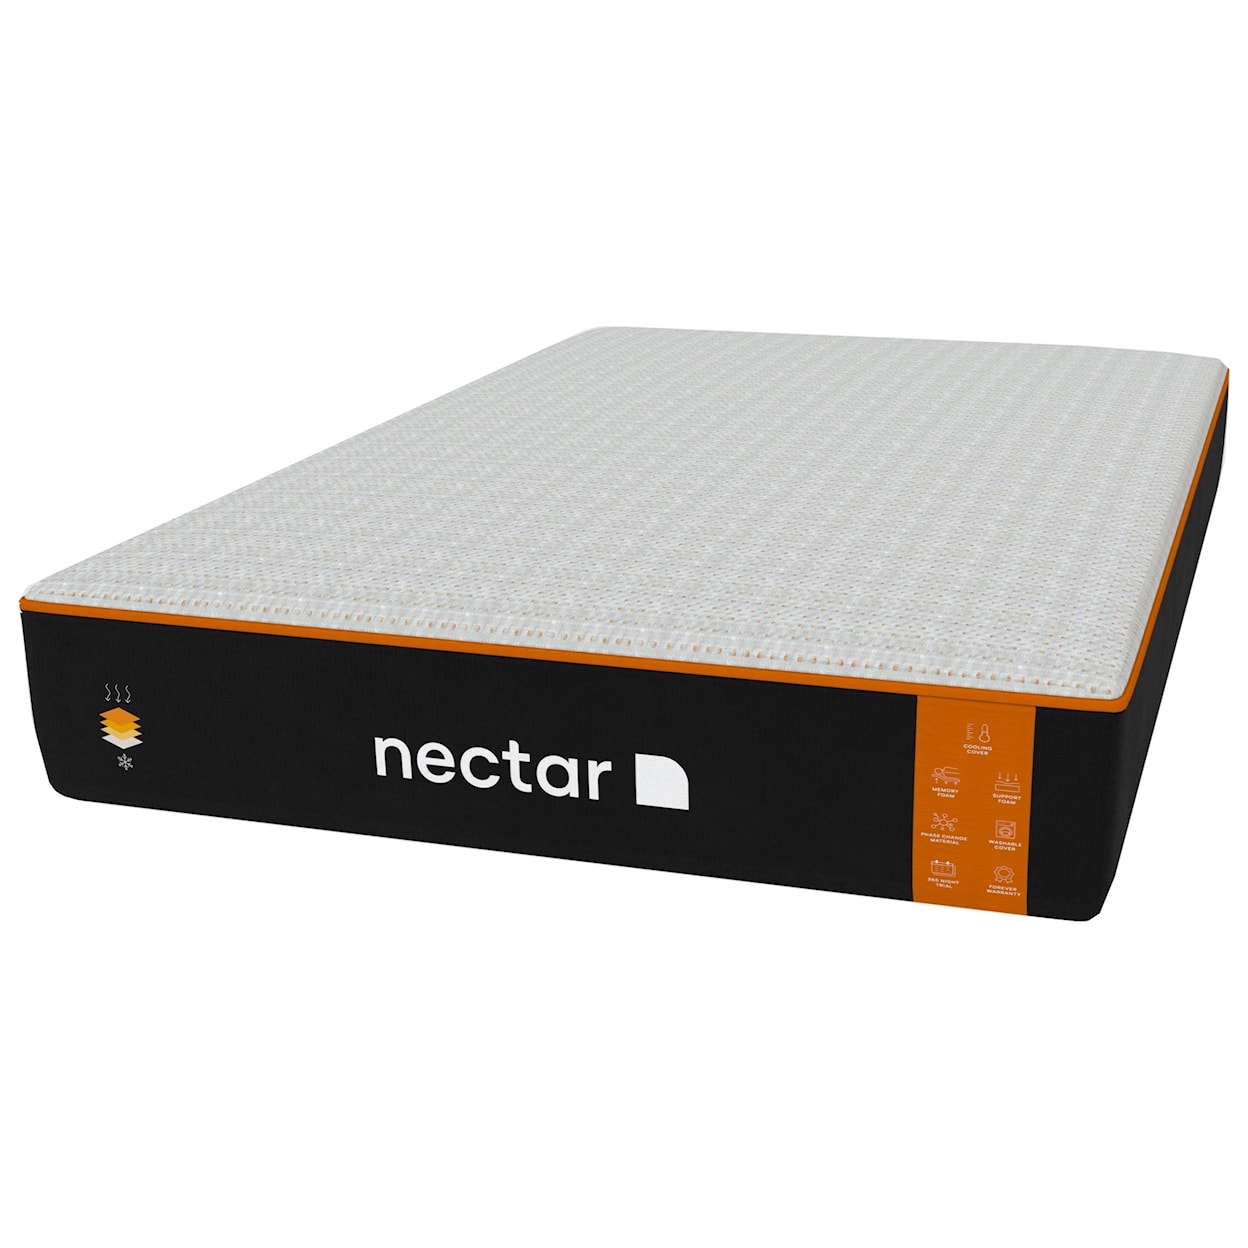 Nectar Nectar Premier Copper Twin XL 14" Gel Memory Foam Mattress